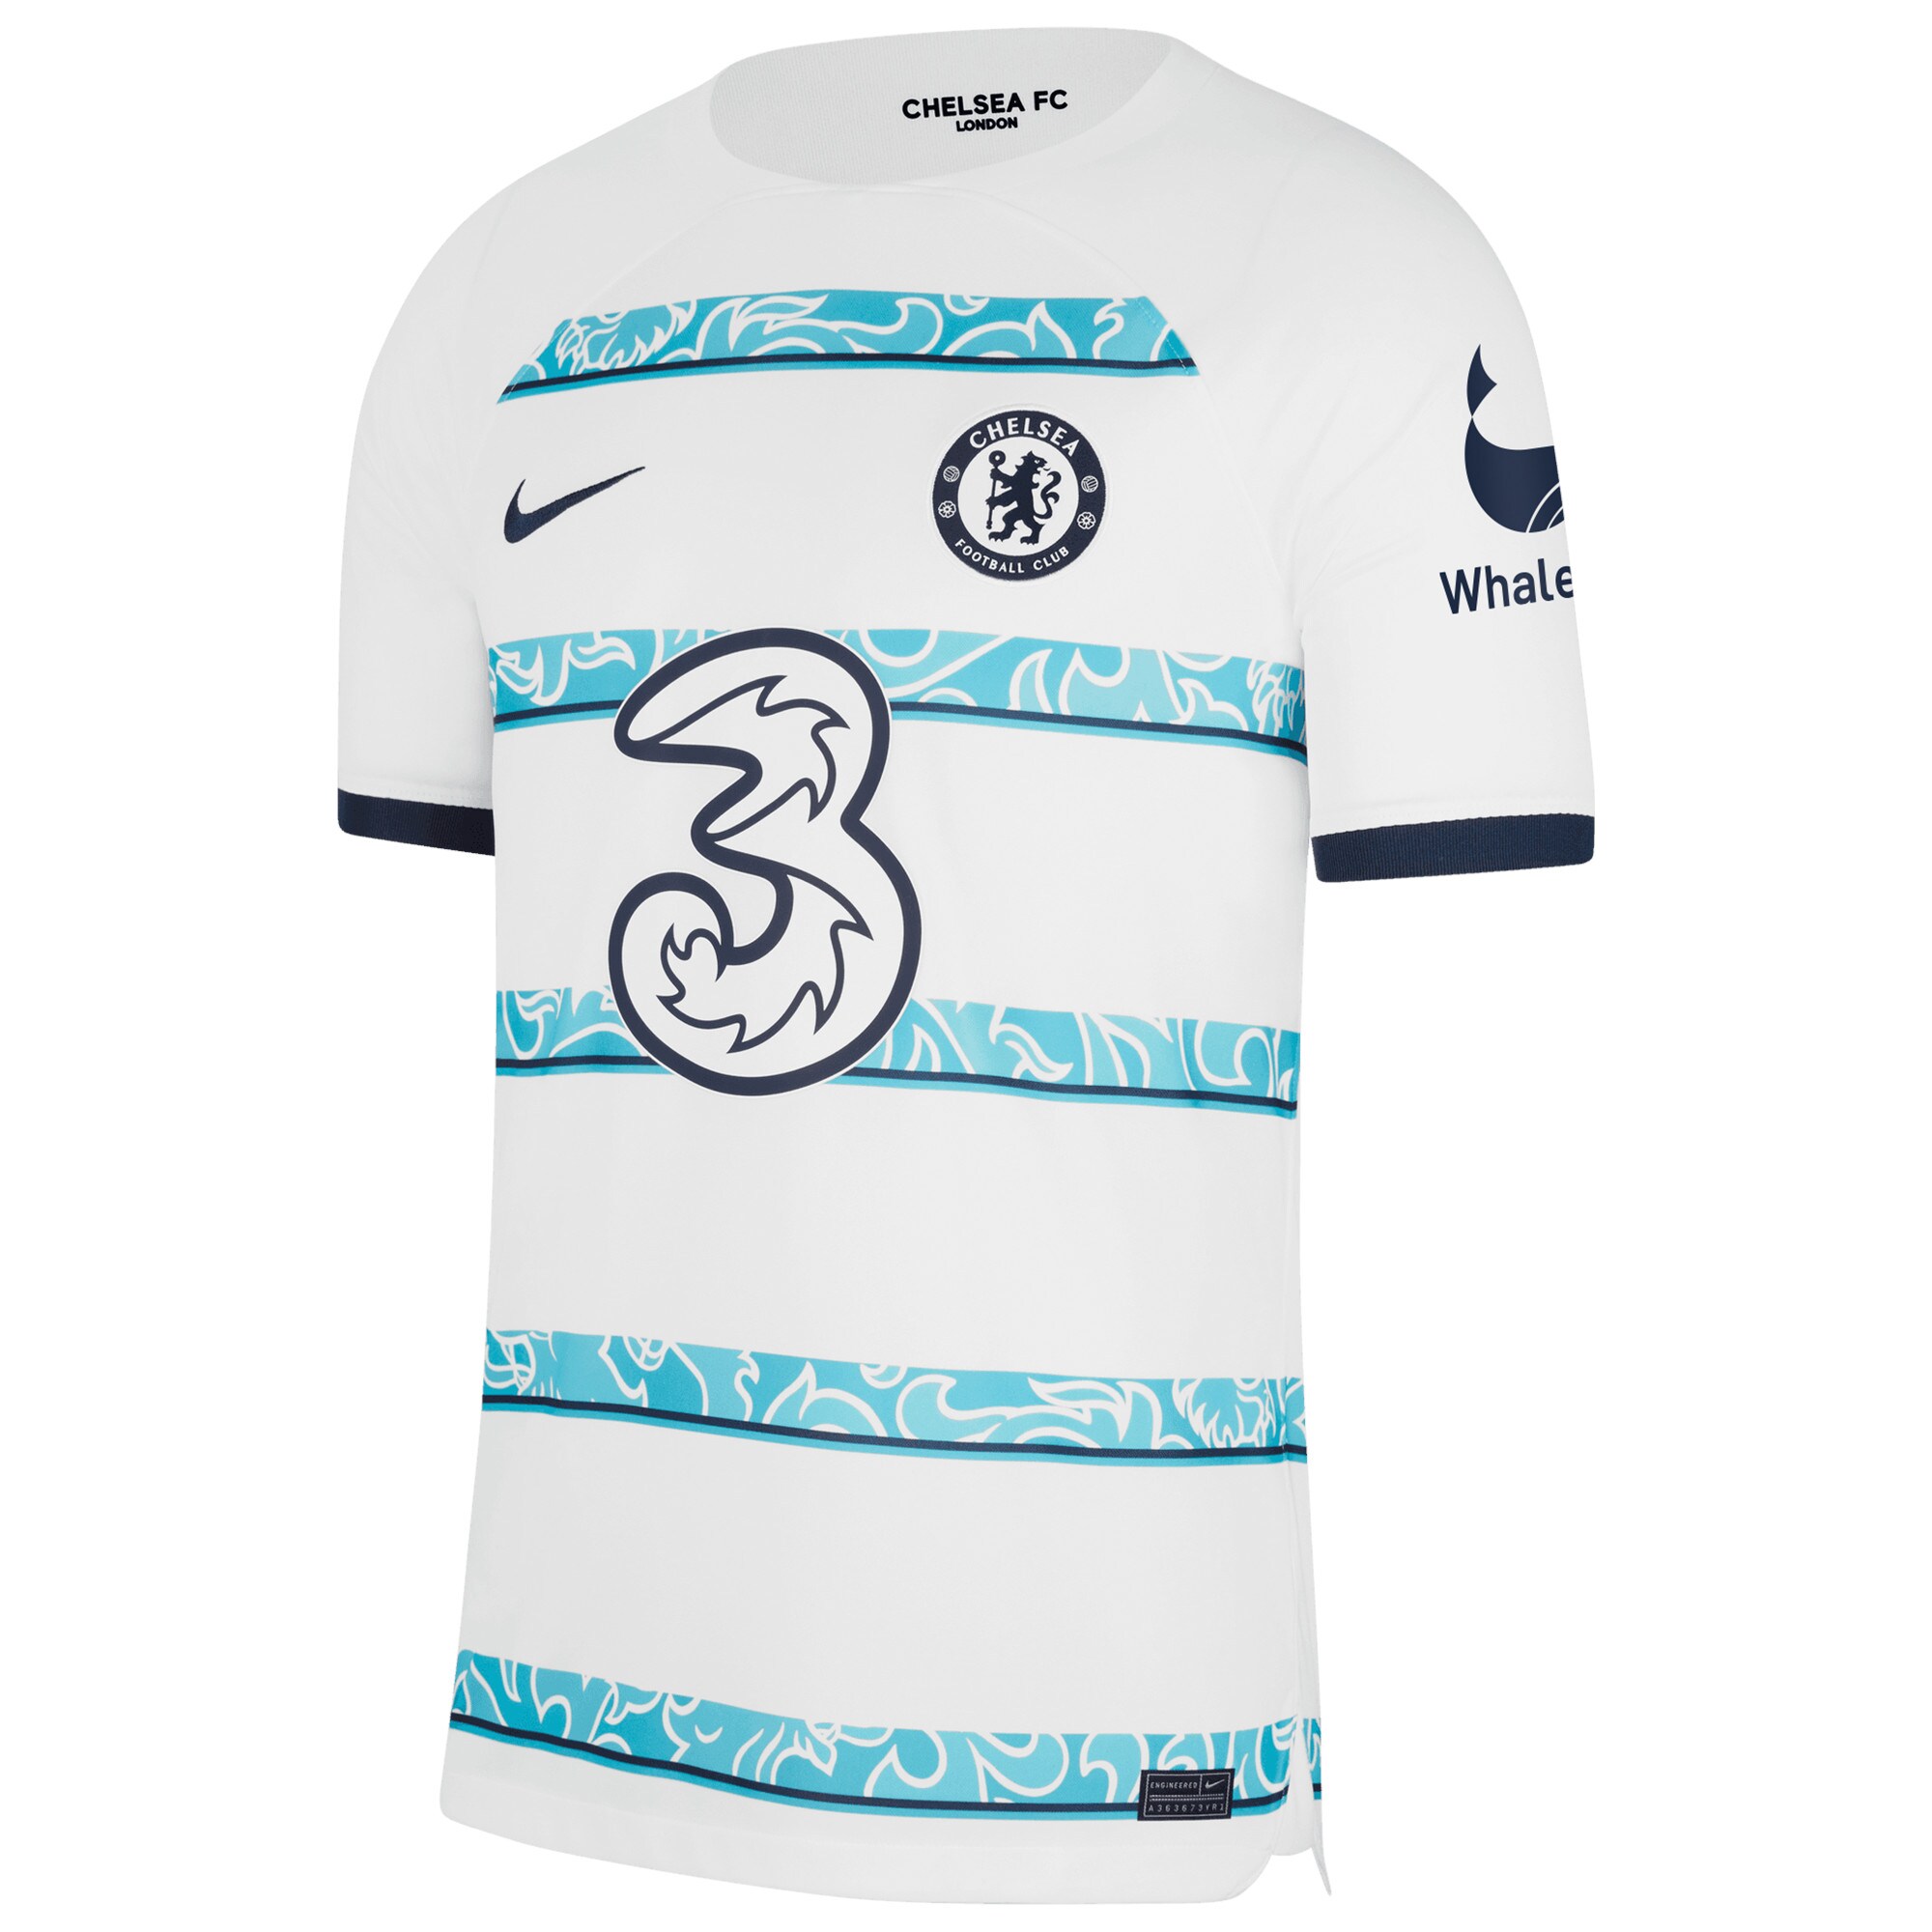 Chelsea Cup Away Stadium Shirt 2022-23 with Loftus-Cheek 12 printing